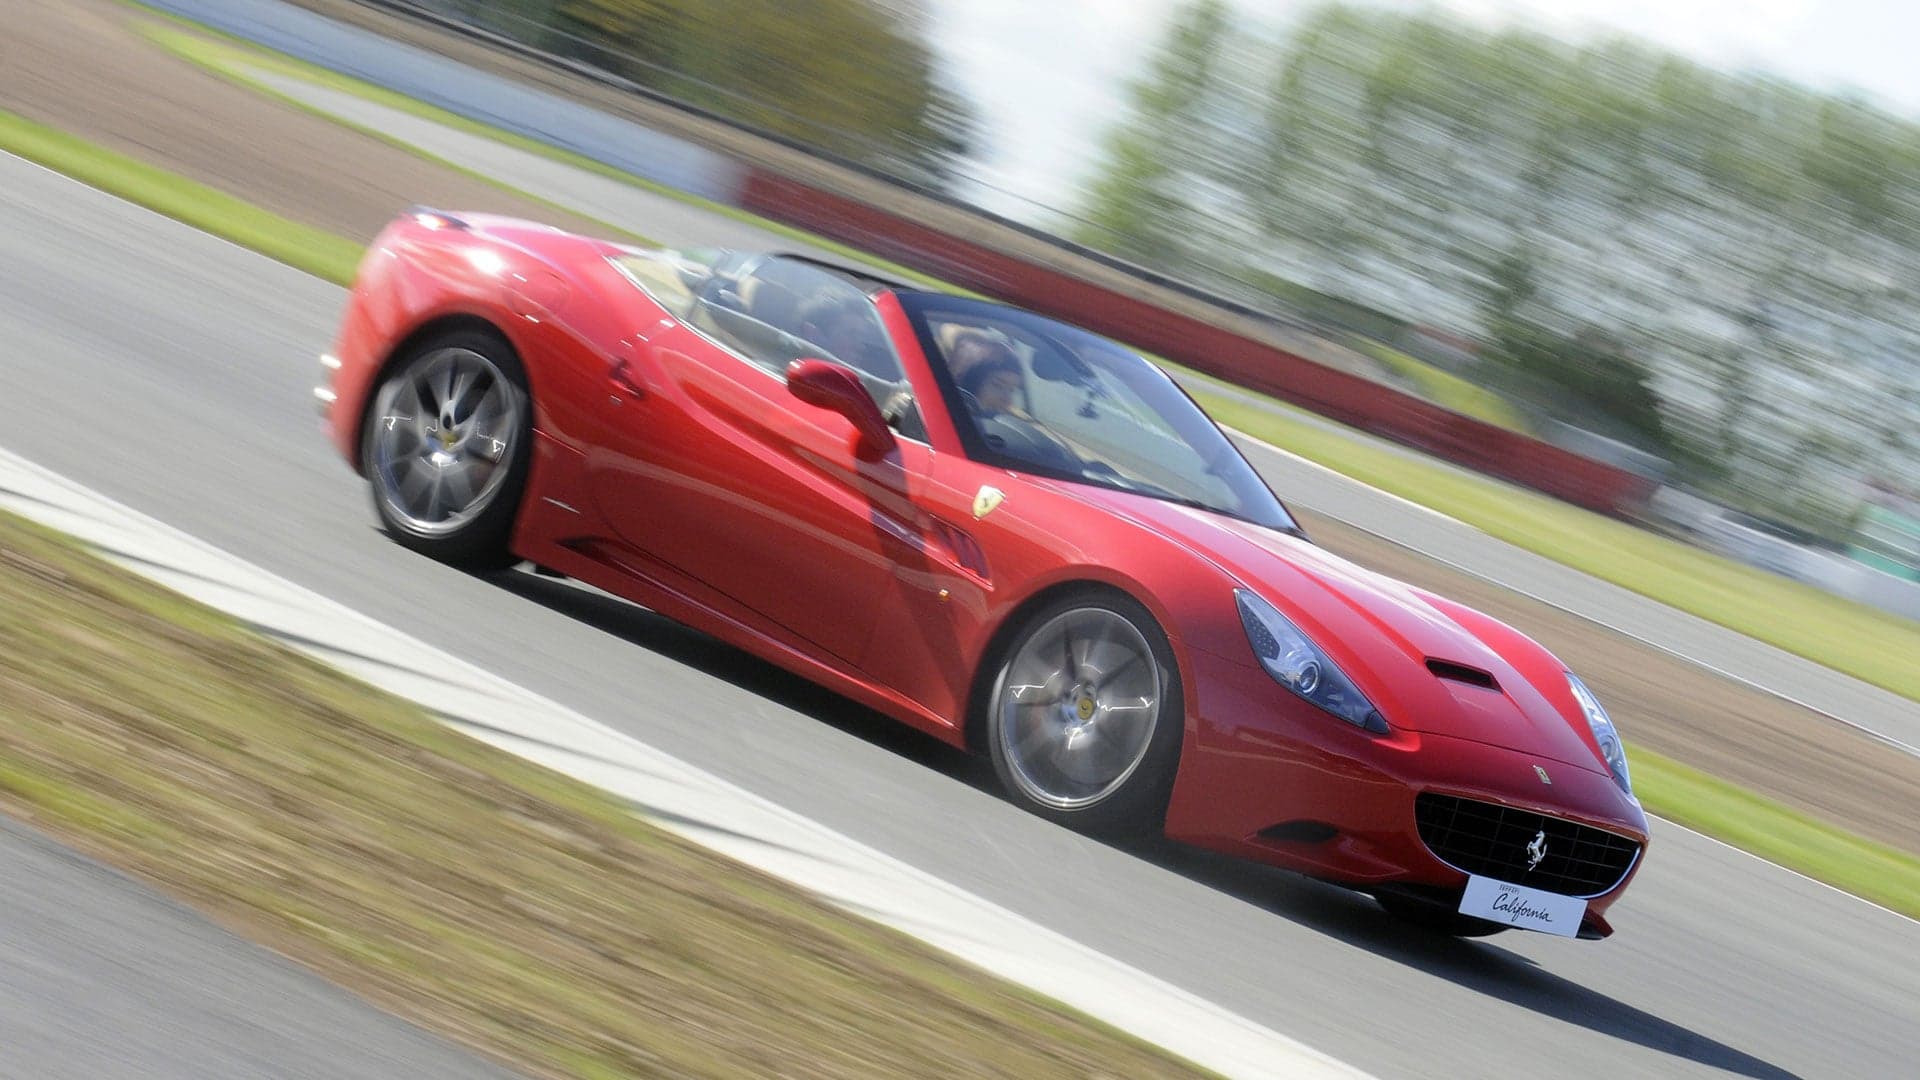 Used Ferrari California Sells for $445k